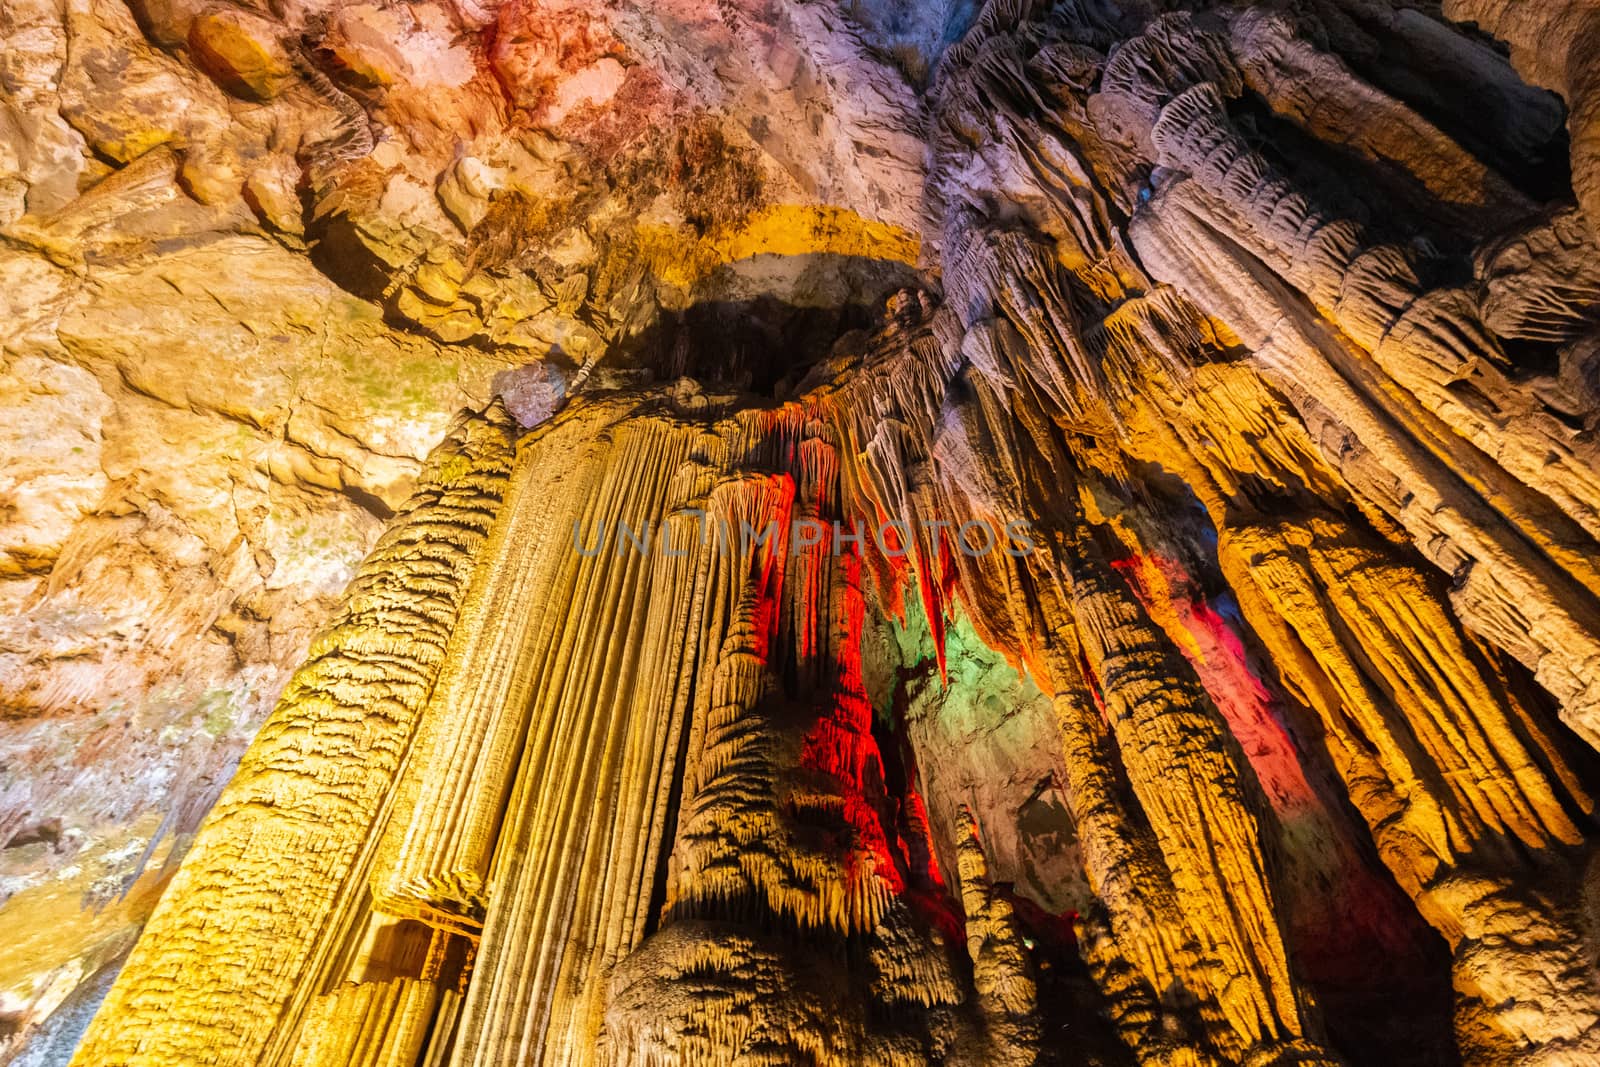 Furong Cave in Wulong Karst National Geology Park, Chongqing, China. by phanthit